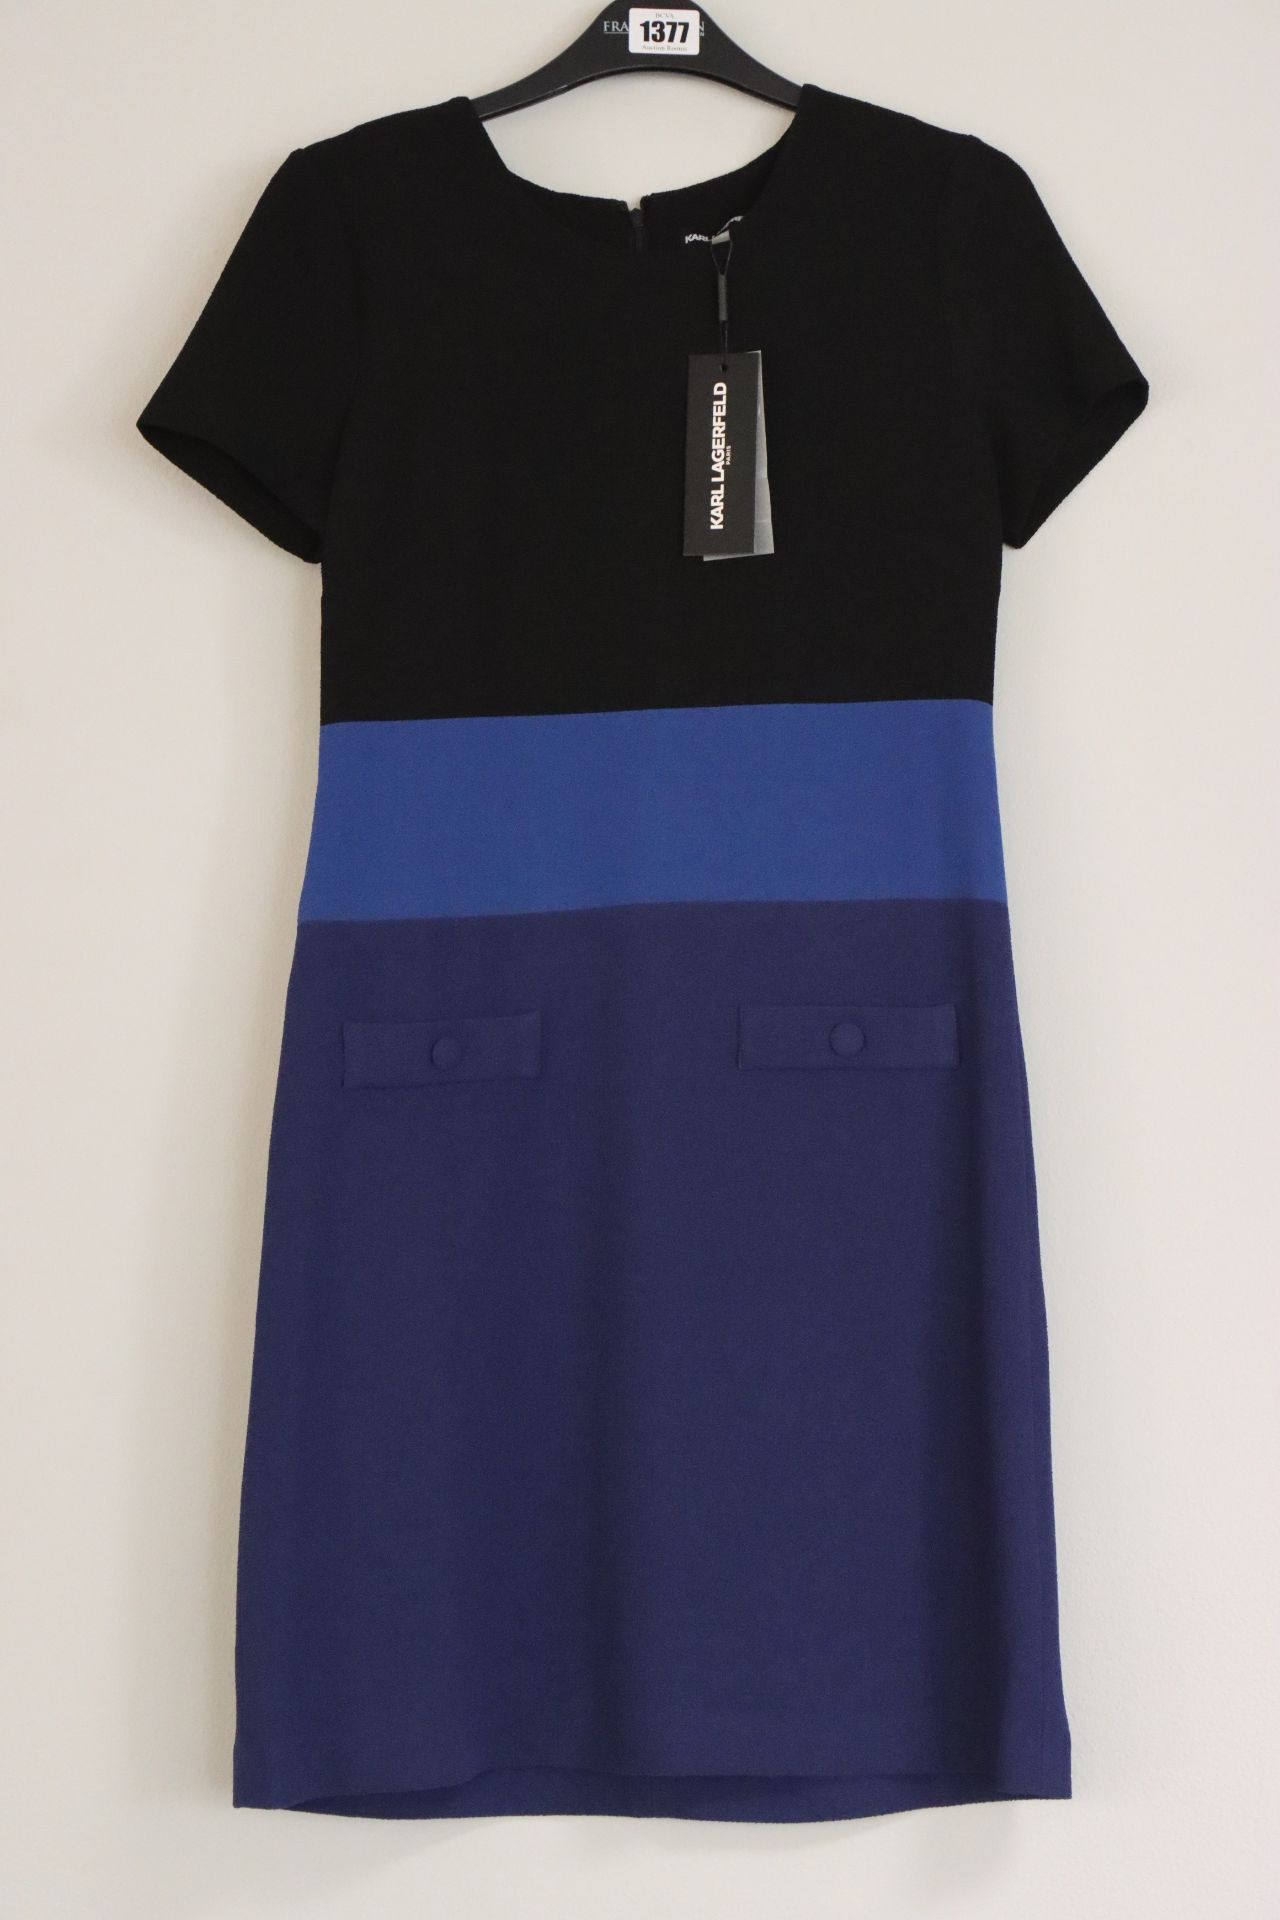 An as new Karl Lagerfeld colour block dress (US 2).